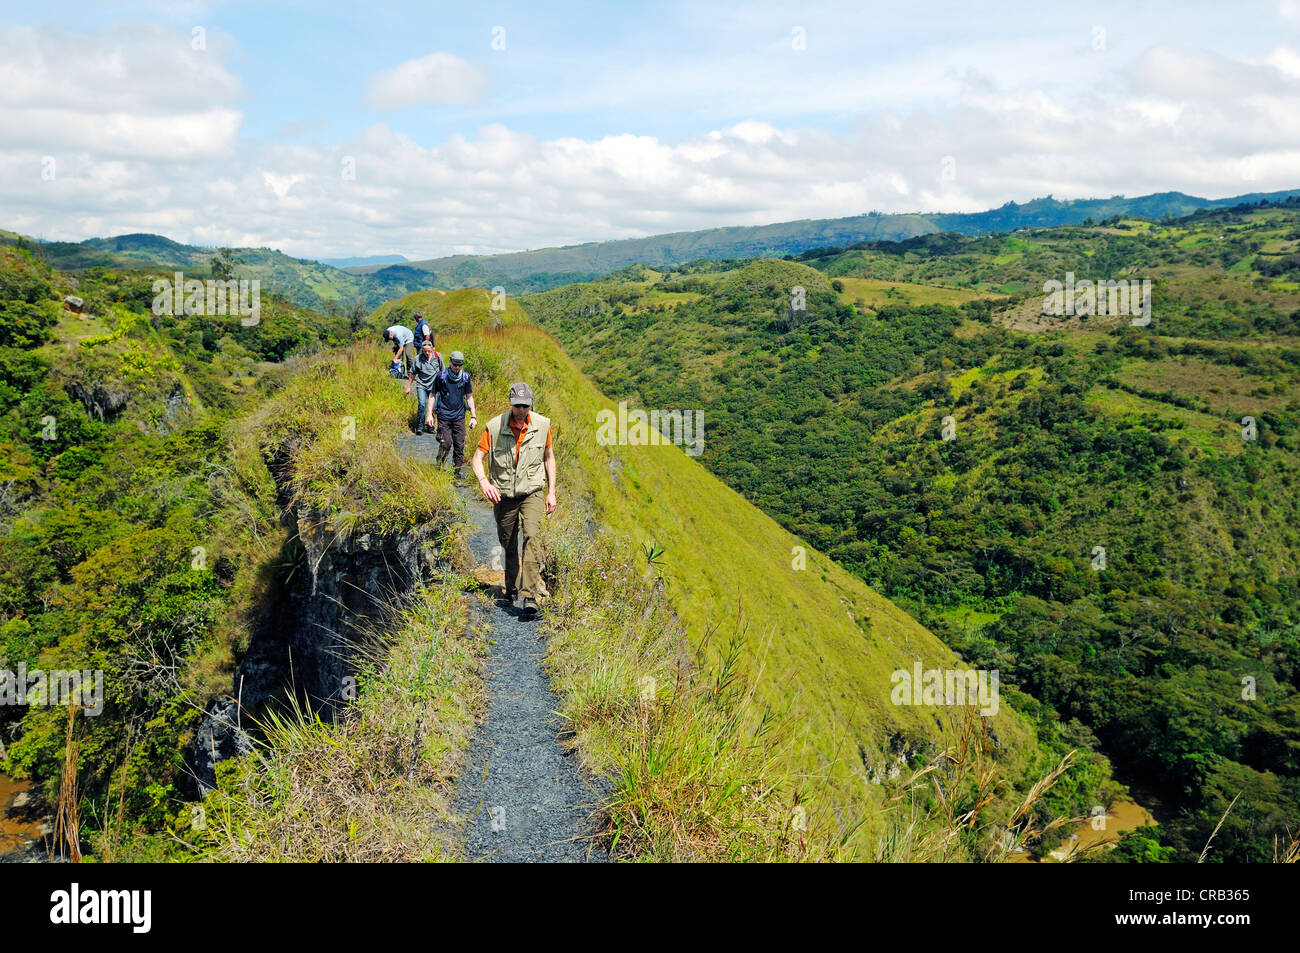 Hikers on Paso del Angel, a narrow pass in Santa Sofia, Villa de Leyva, Boyaca department, Colombia, South America Stock Photo